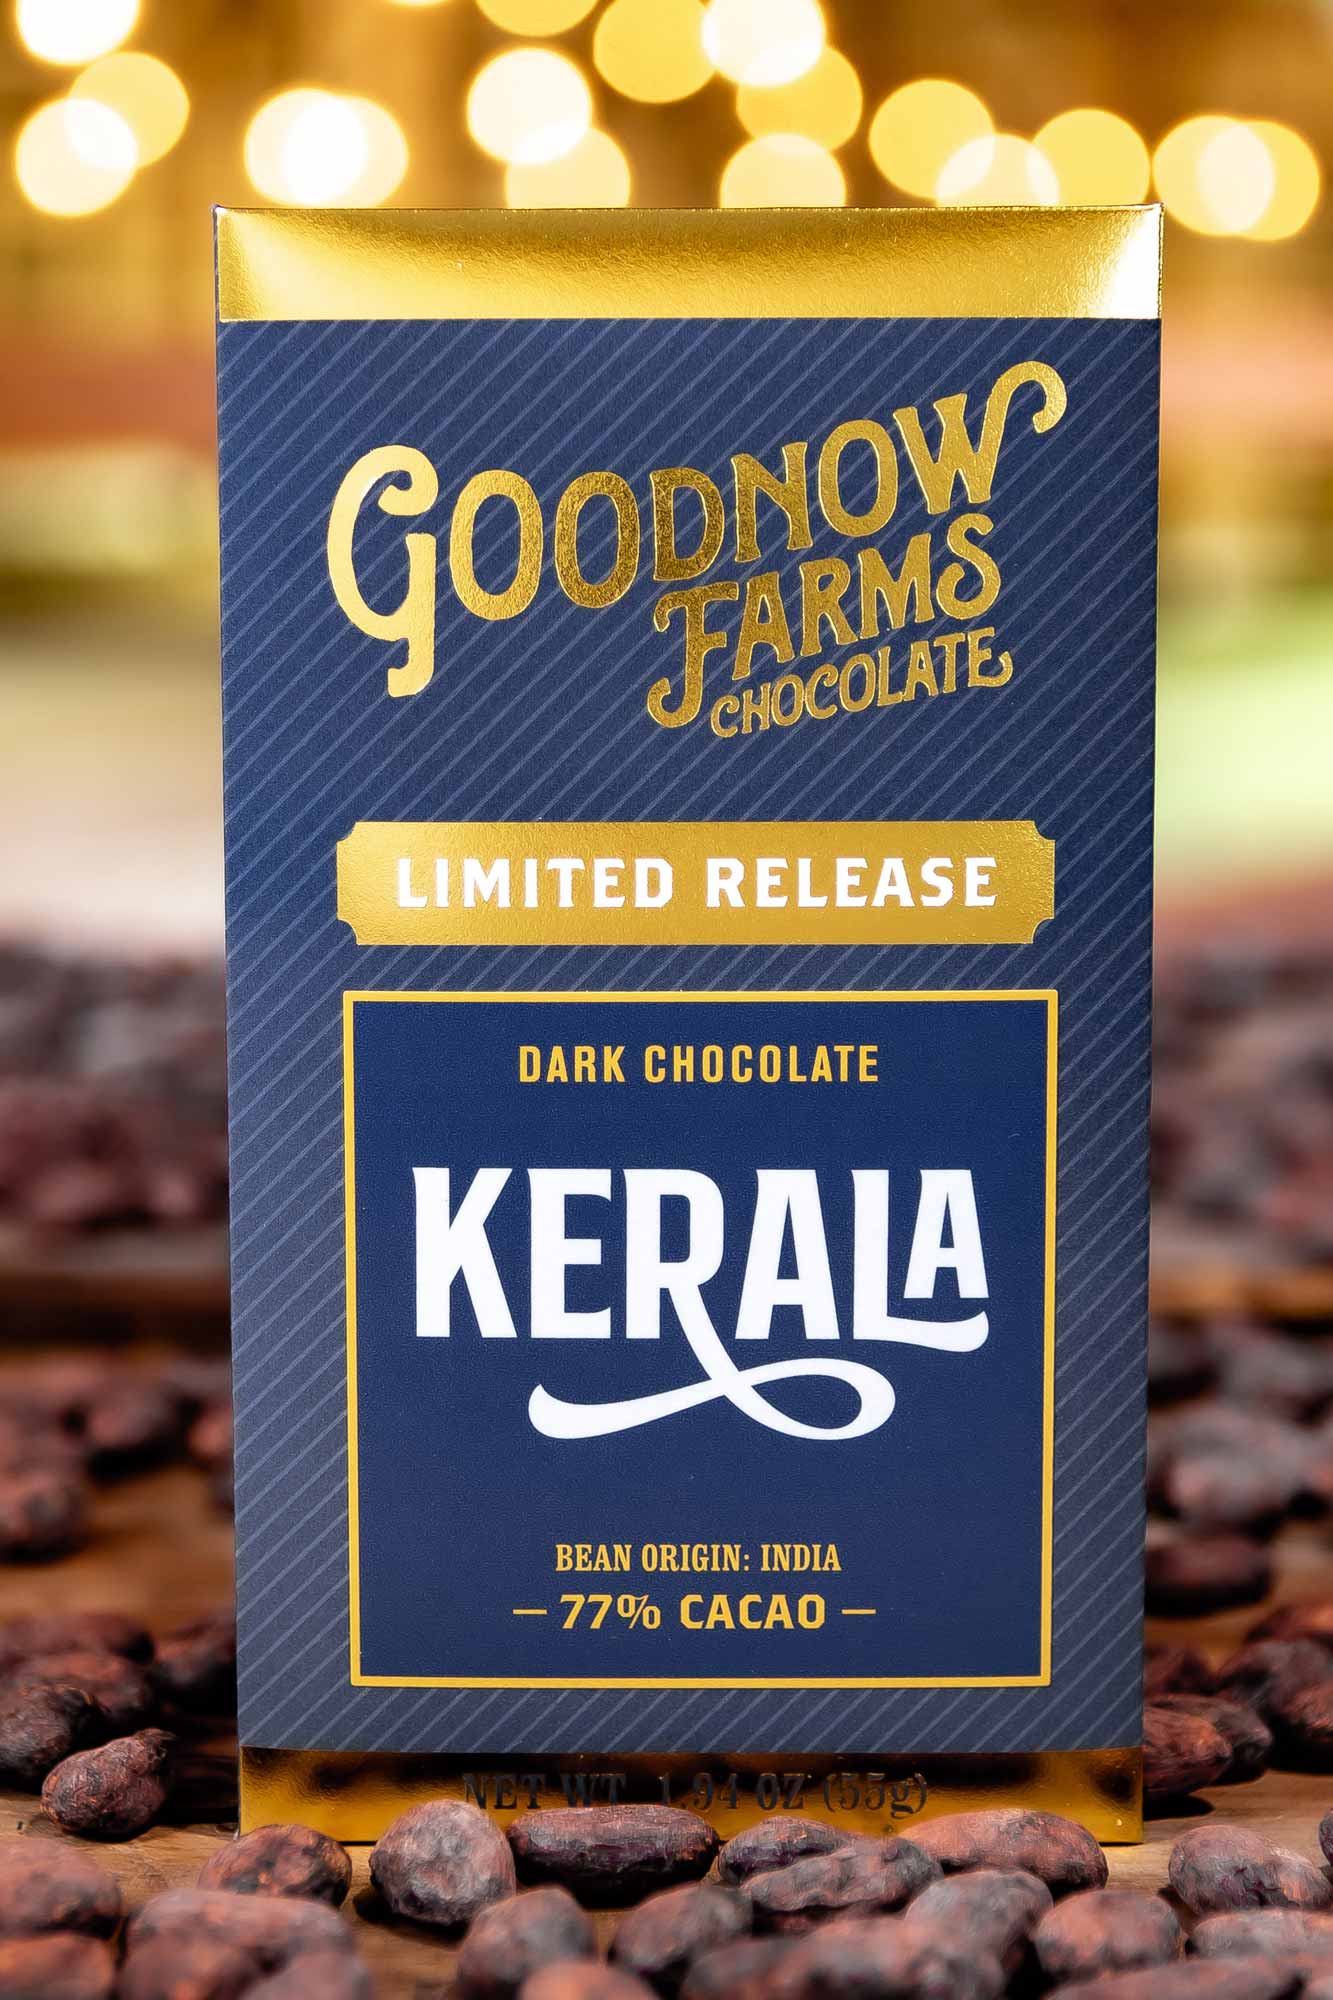 Goodnow Farms Kerala India 77% Dark Chocolate Bar